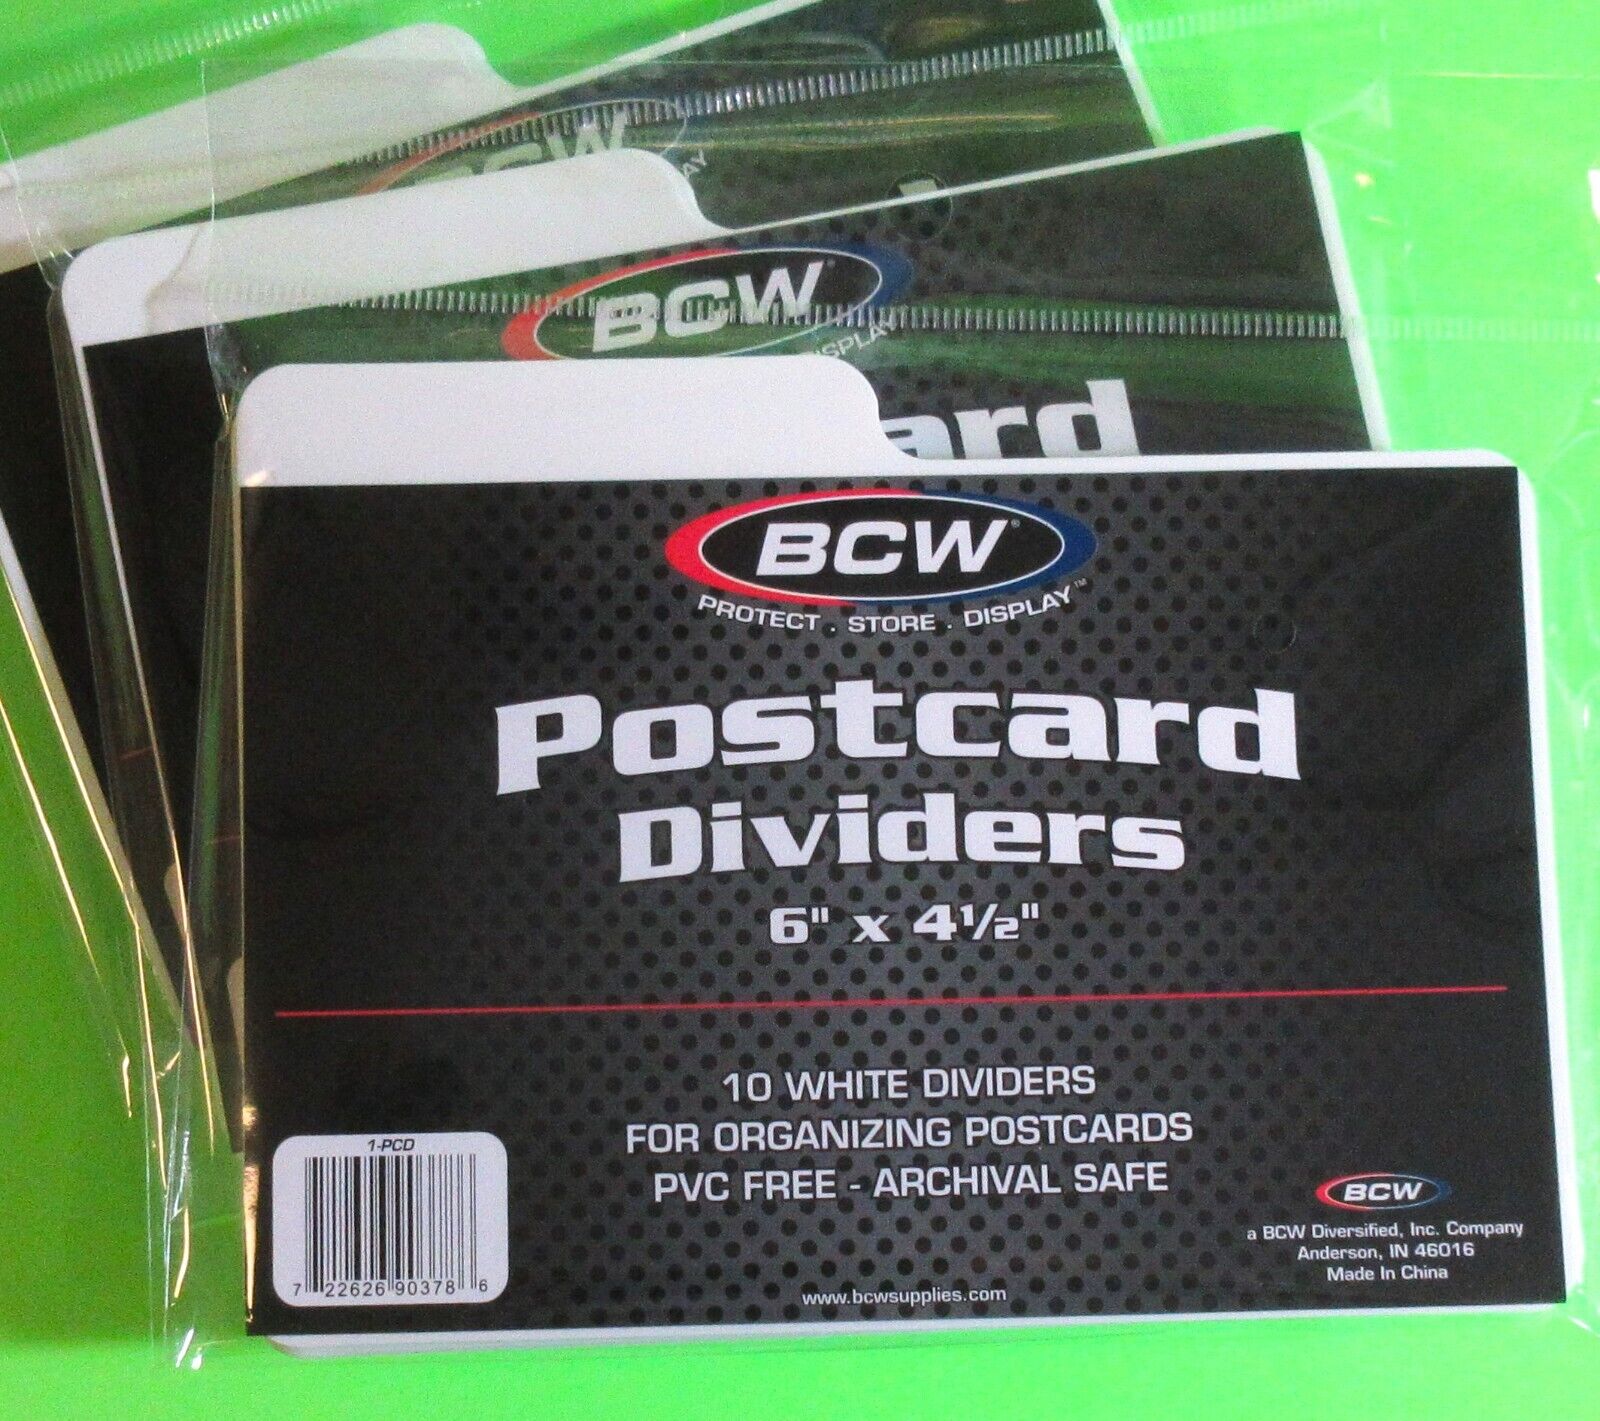 30 POSTCARD DIVIDER , 1-PCD, PVC FREE, ARCHIVAL SAFE, 6